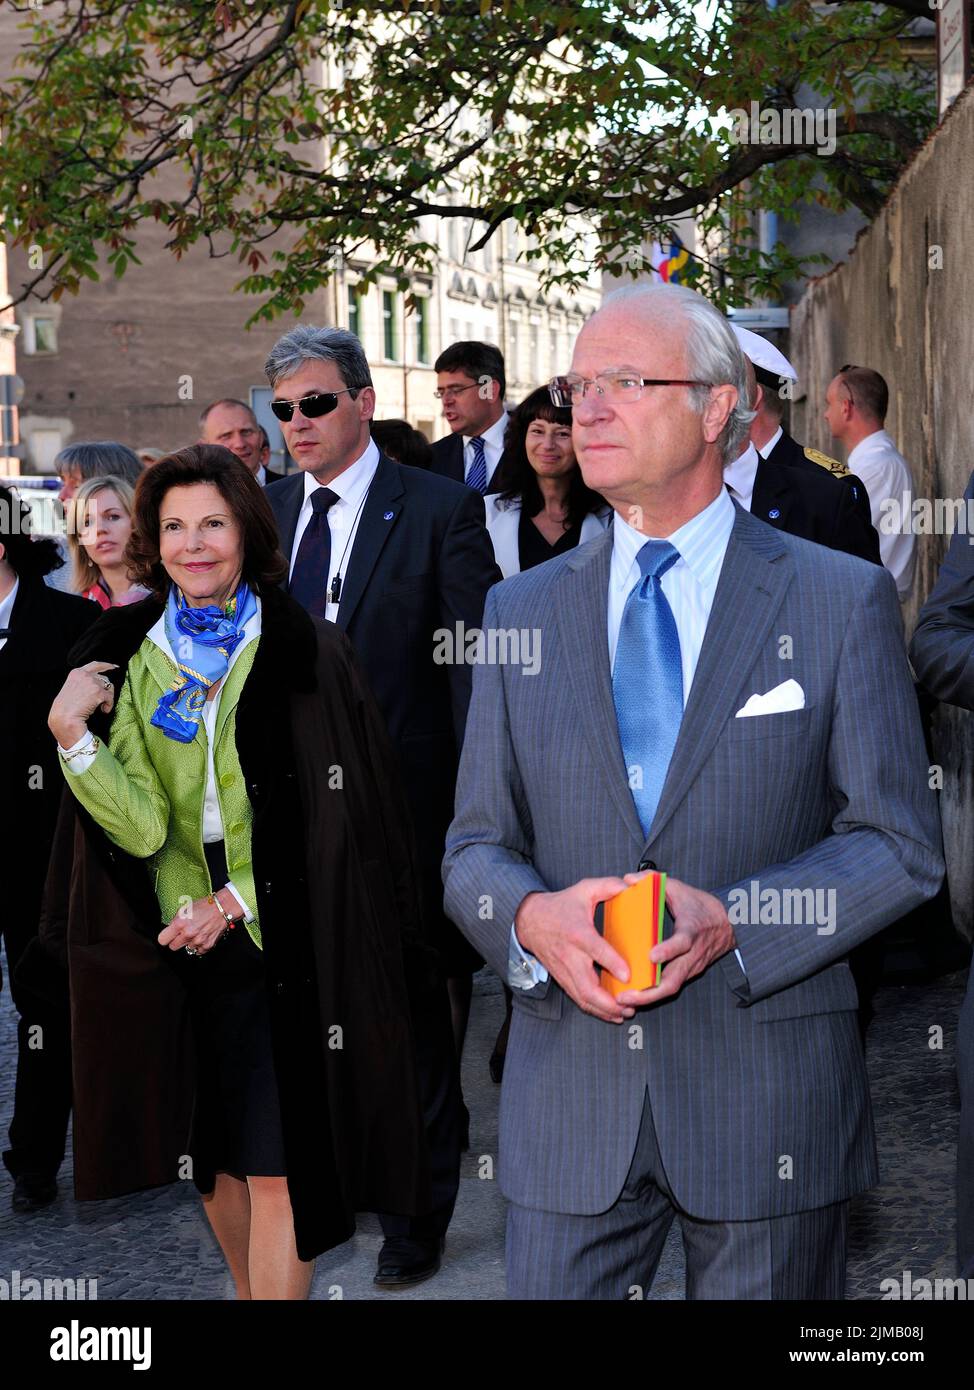 La reina Silvia Rey Carl XVI Gustaf de Suecia y la Reina Silvia de Suecia foto por Kazimierz Jurewicz Foto de stock